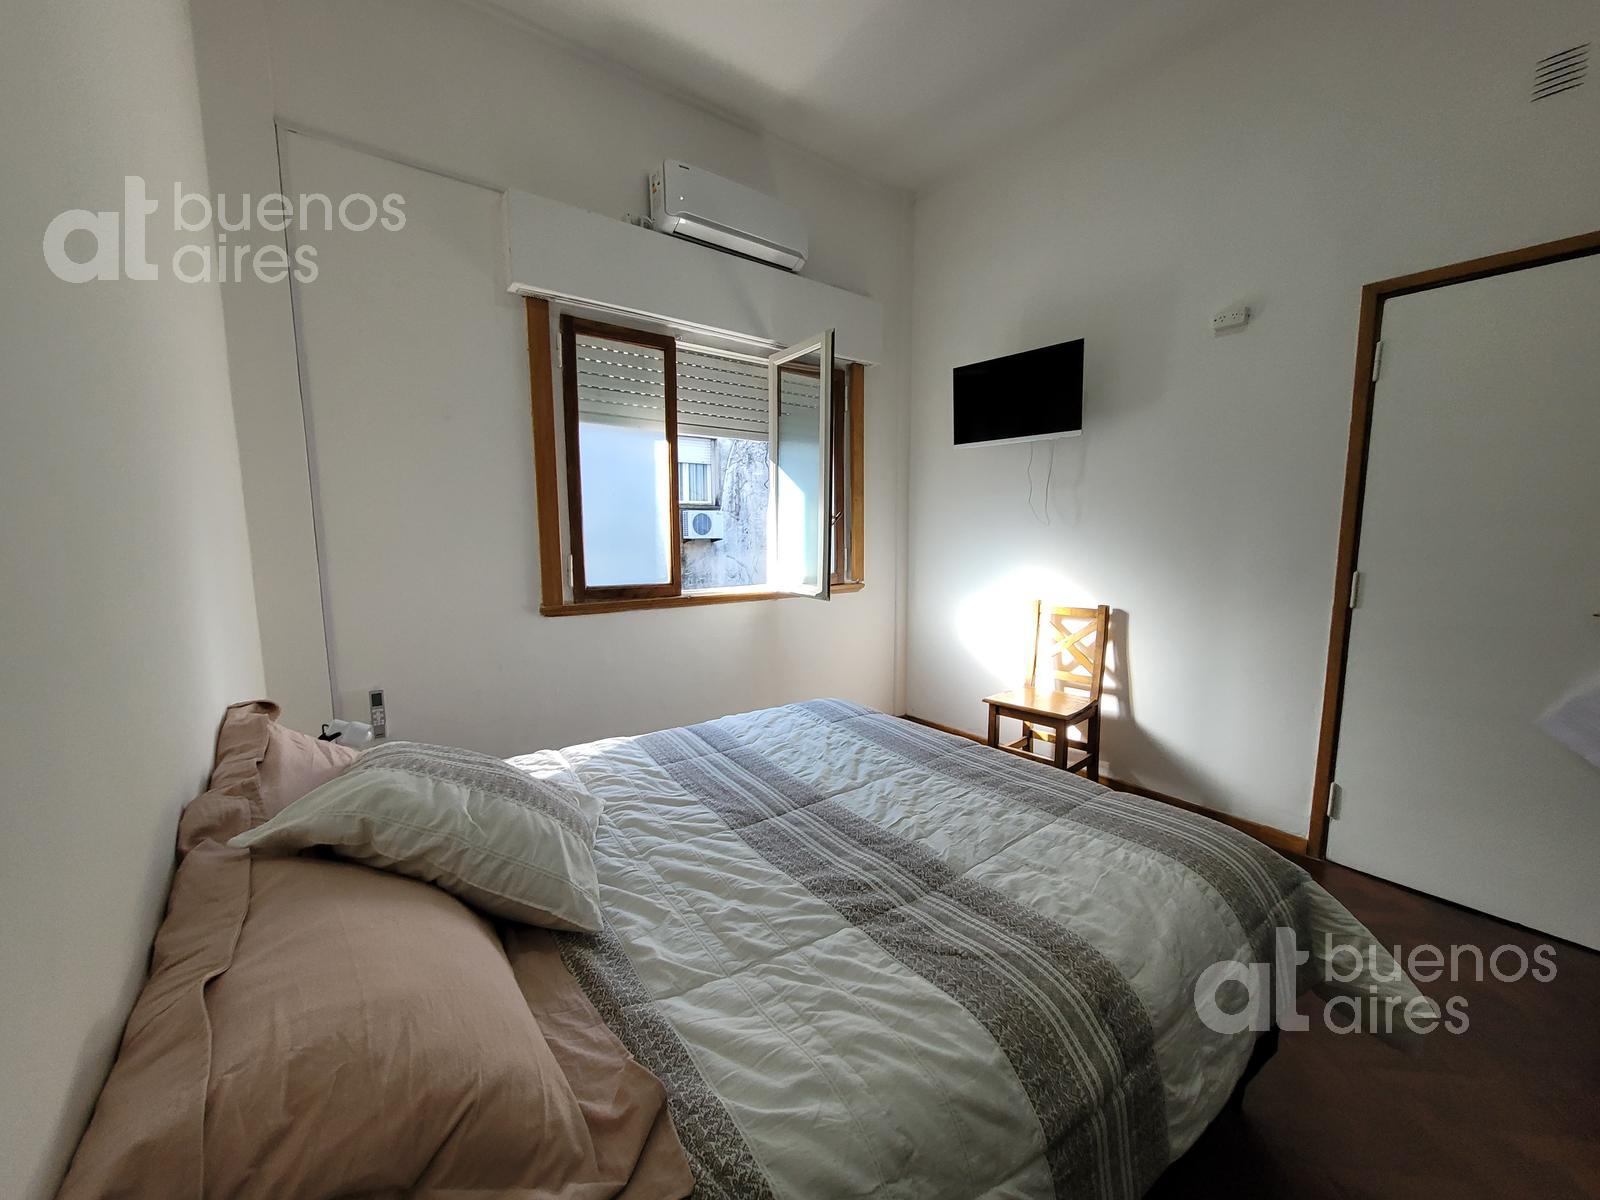 #5046689 | Temporary Rental | Apartment | San Telmo (At Buenos Aires)